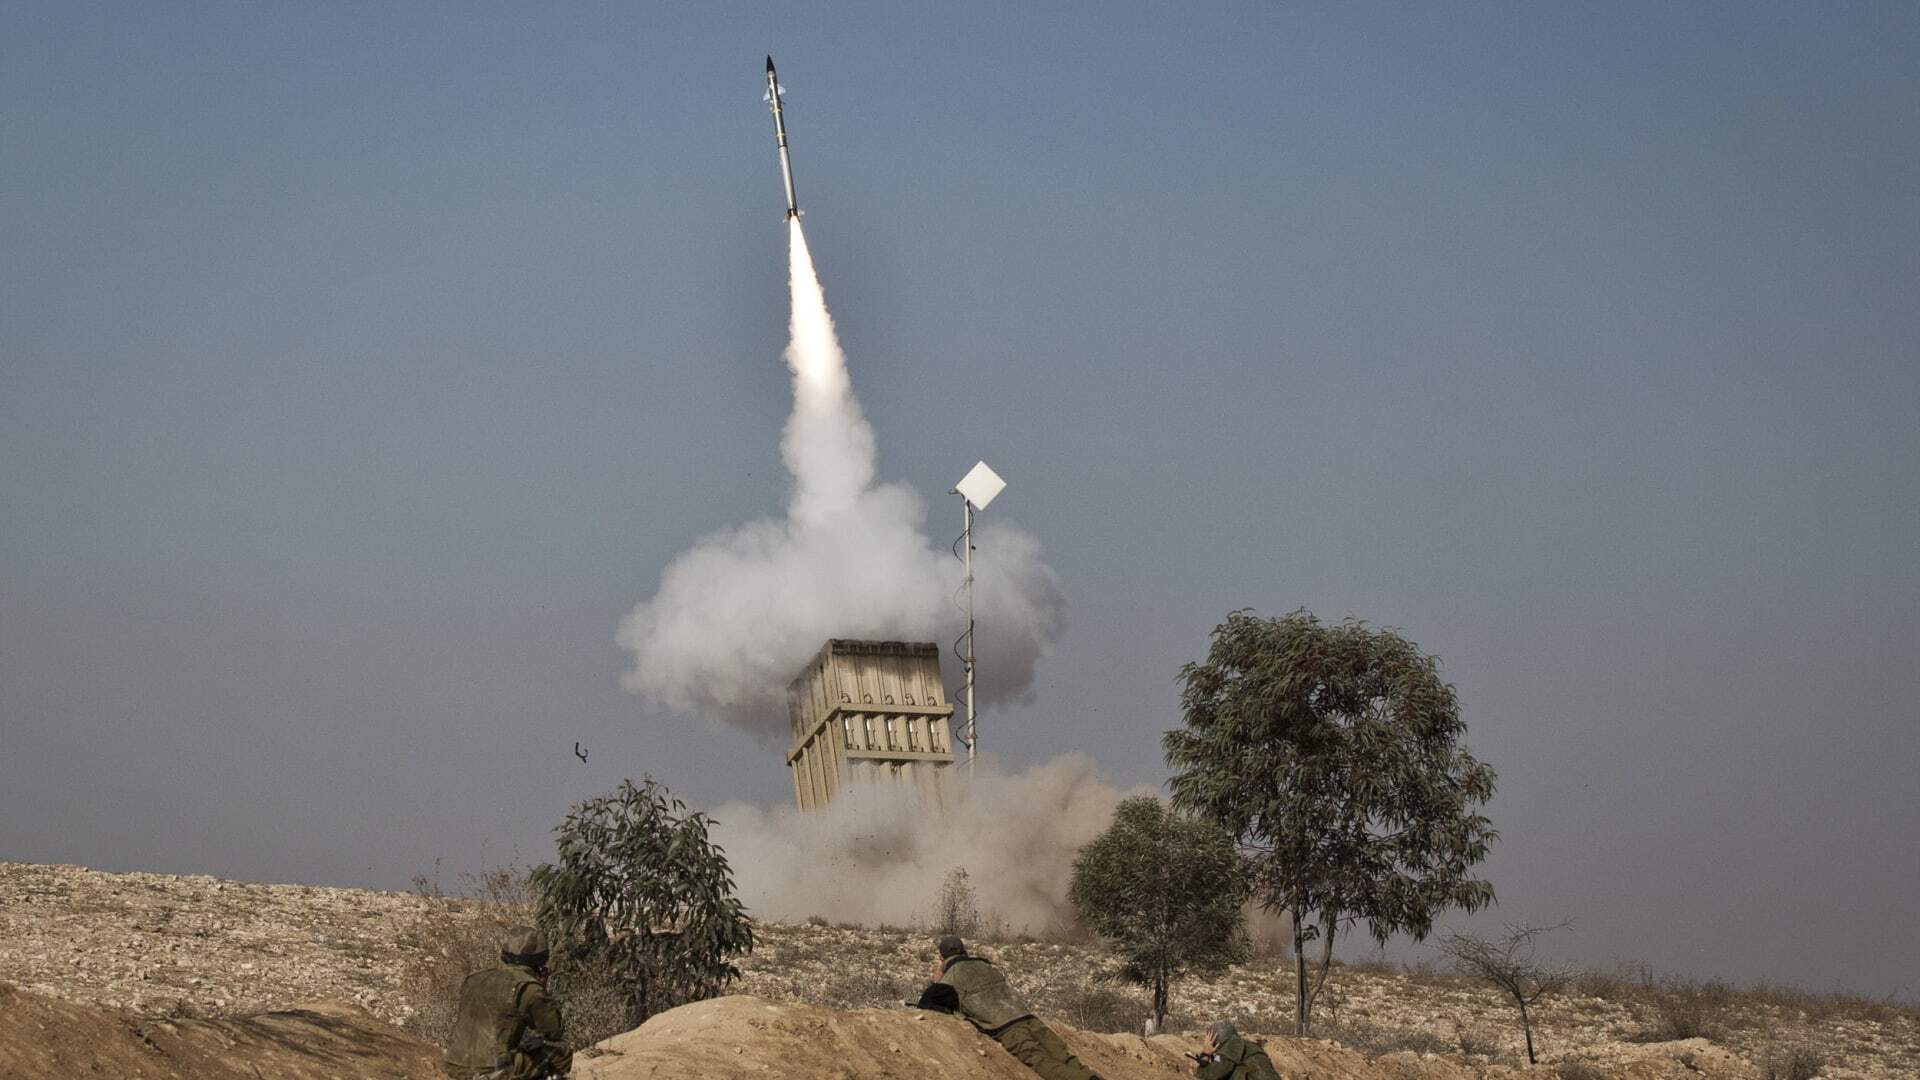 Israeli military intercepts missile aimed at Eilat, Yemen claims responsibility